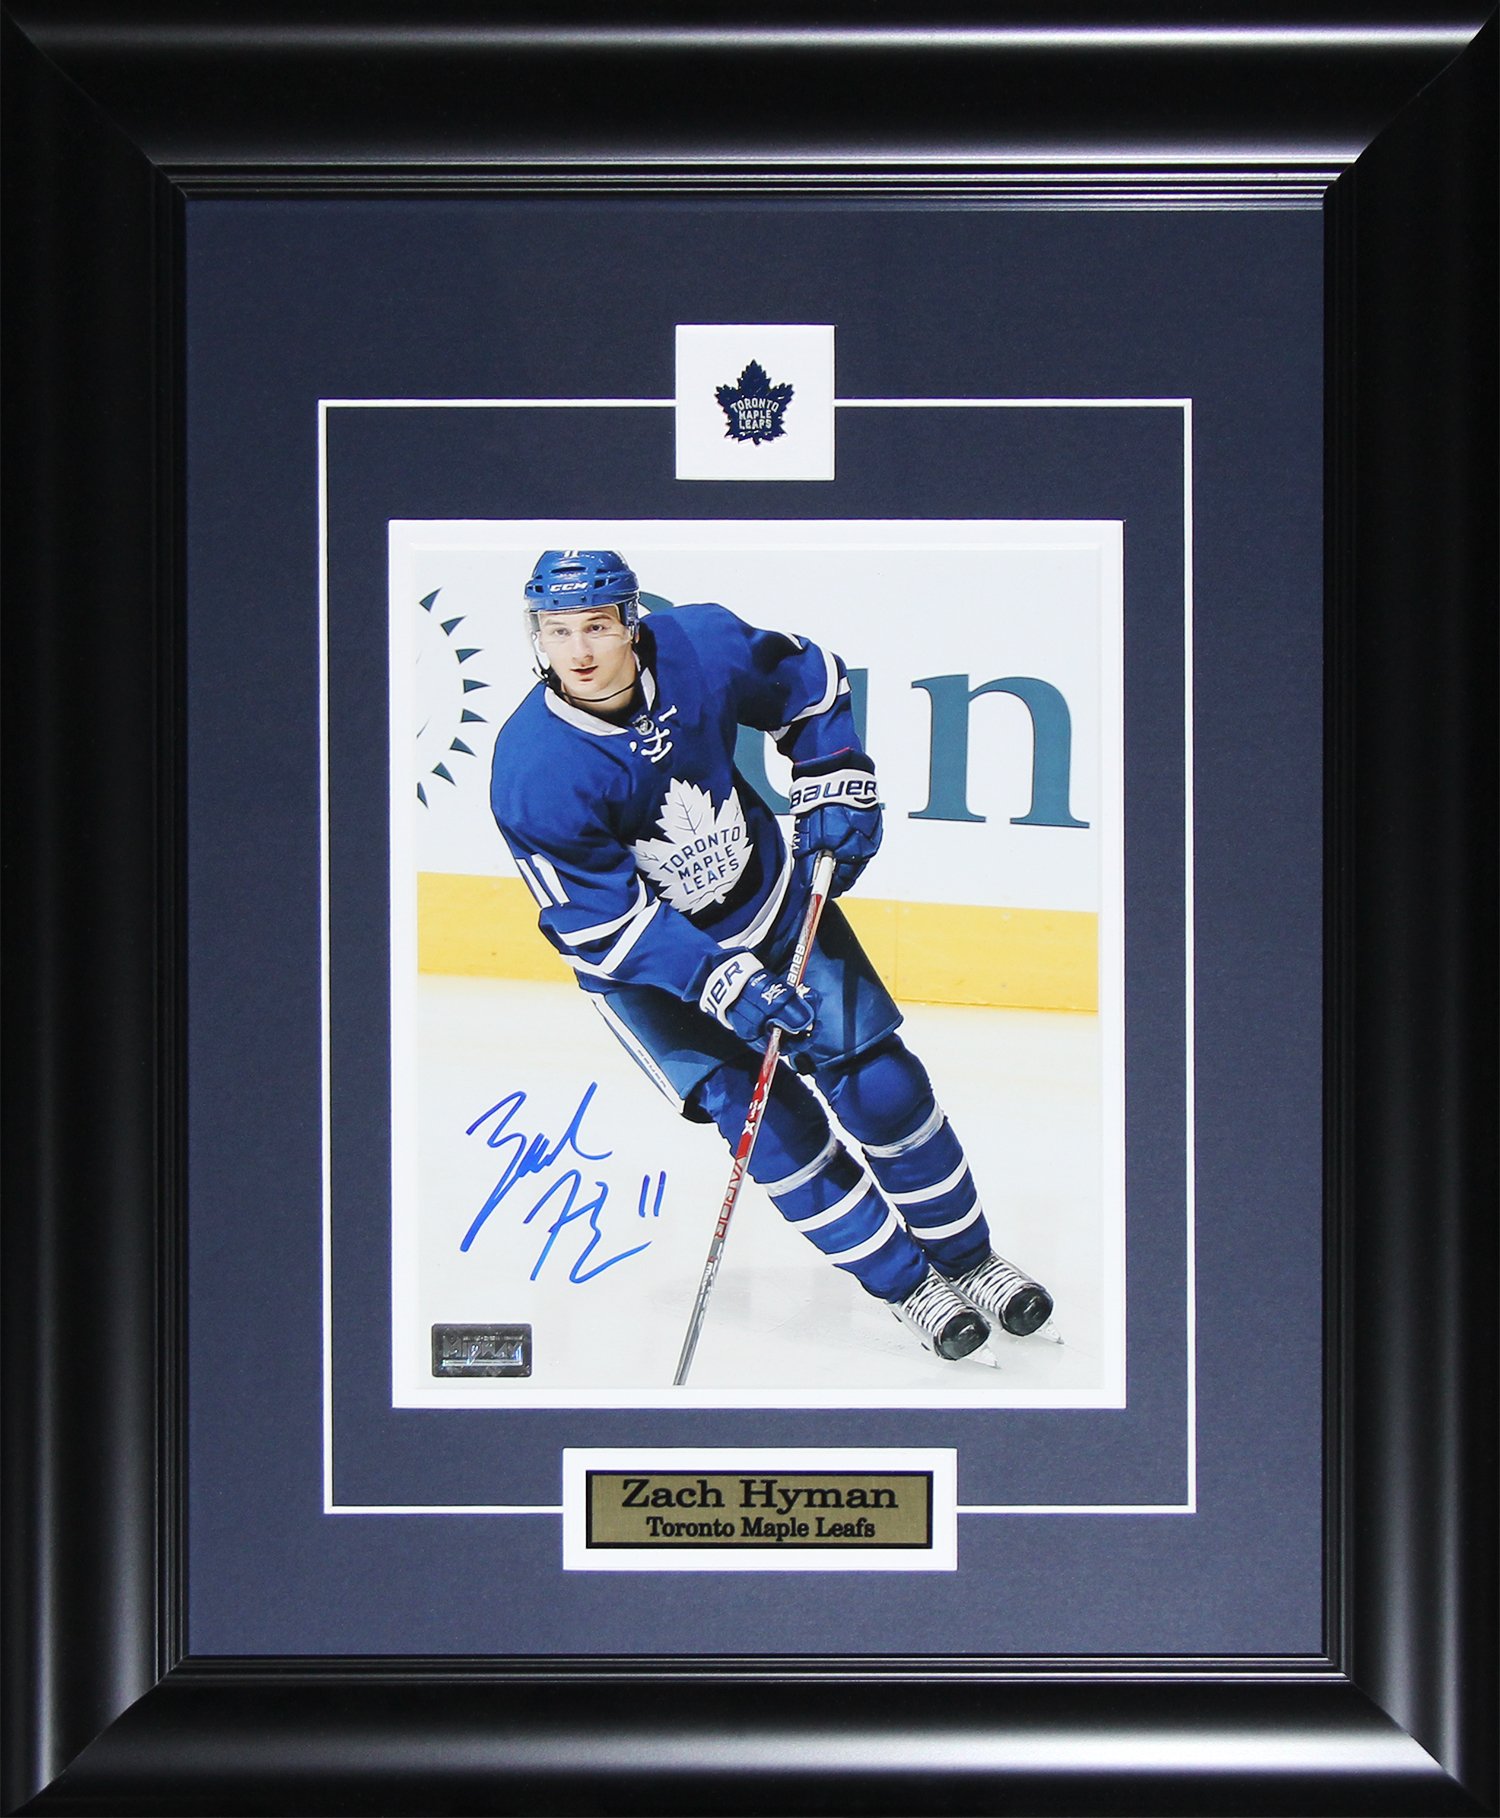 Zach Hyman Toronto Maple Leafs Hockey Memorabilia Signed 8x10 Collector ...